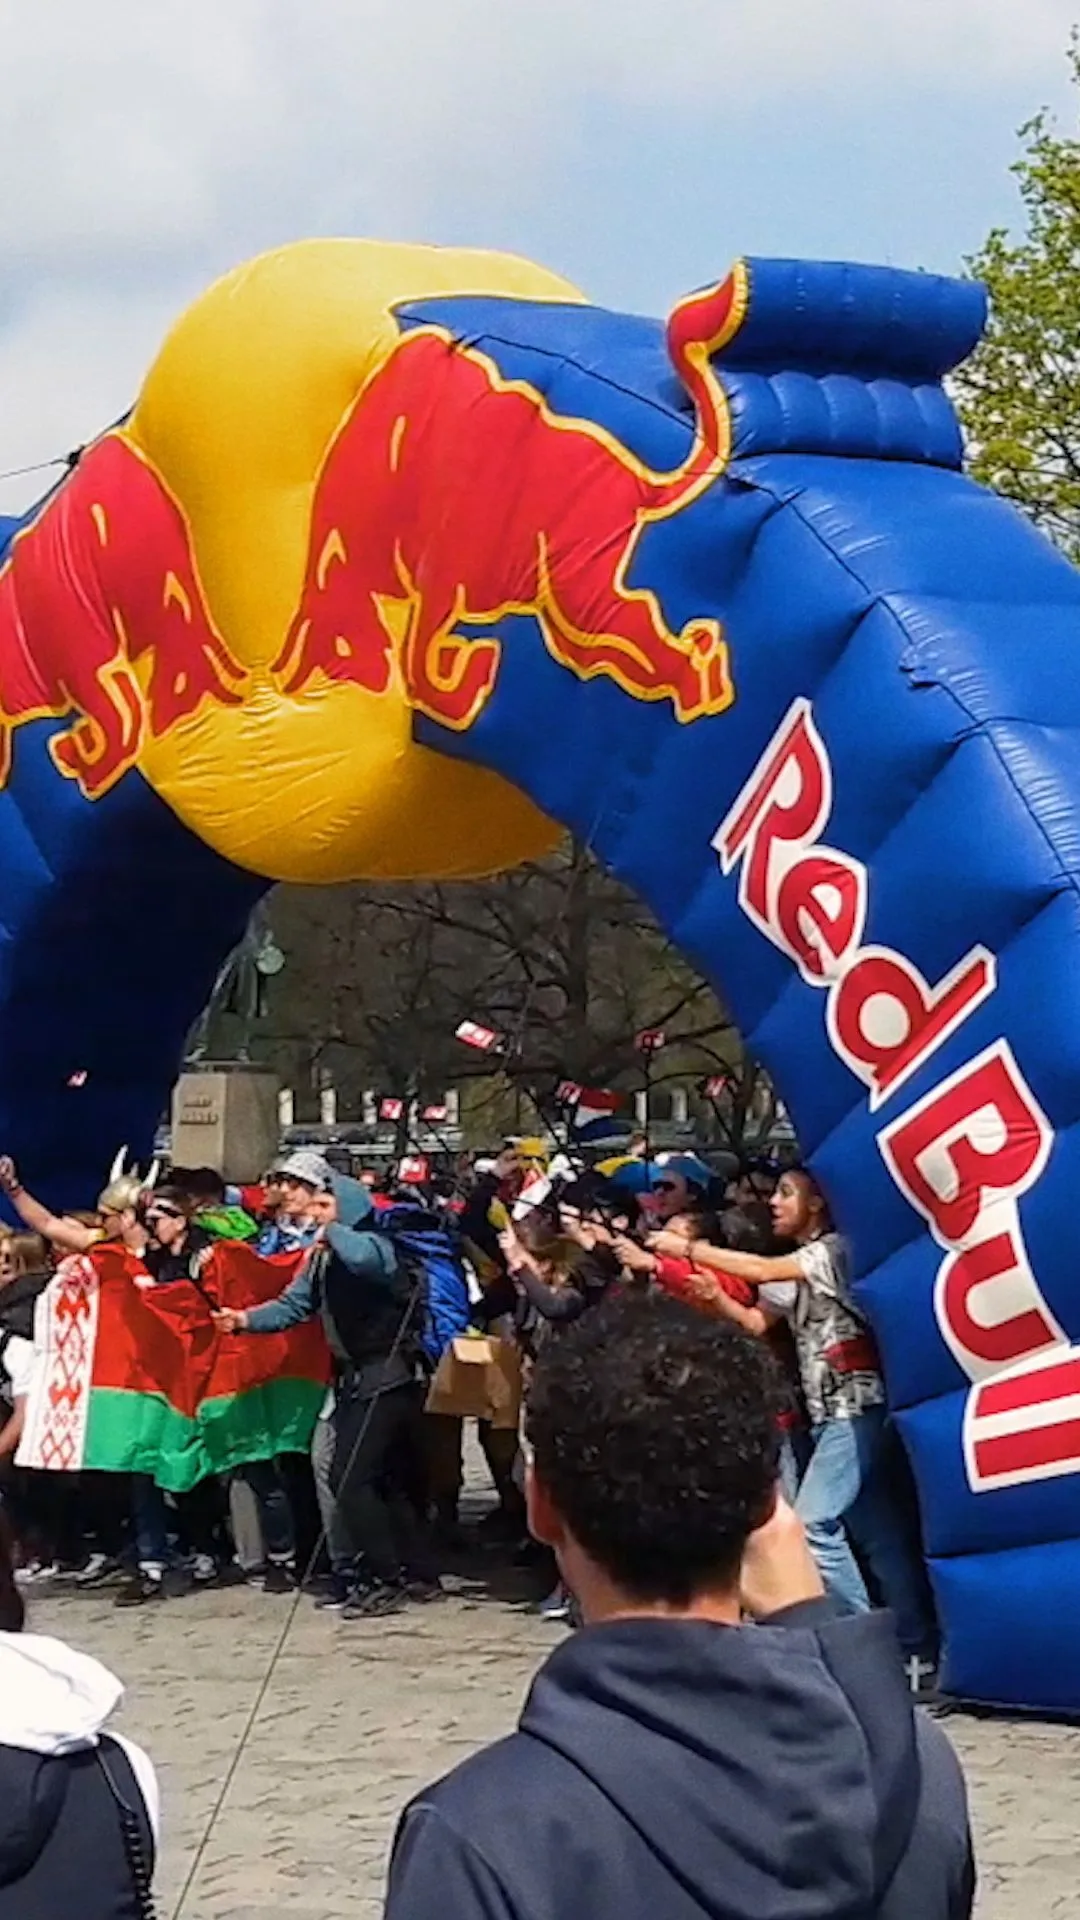 Red Bull Can You Make It - El reto del año